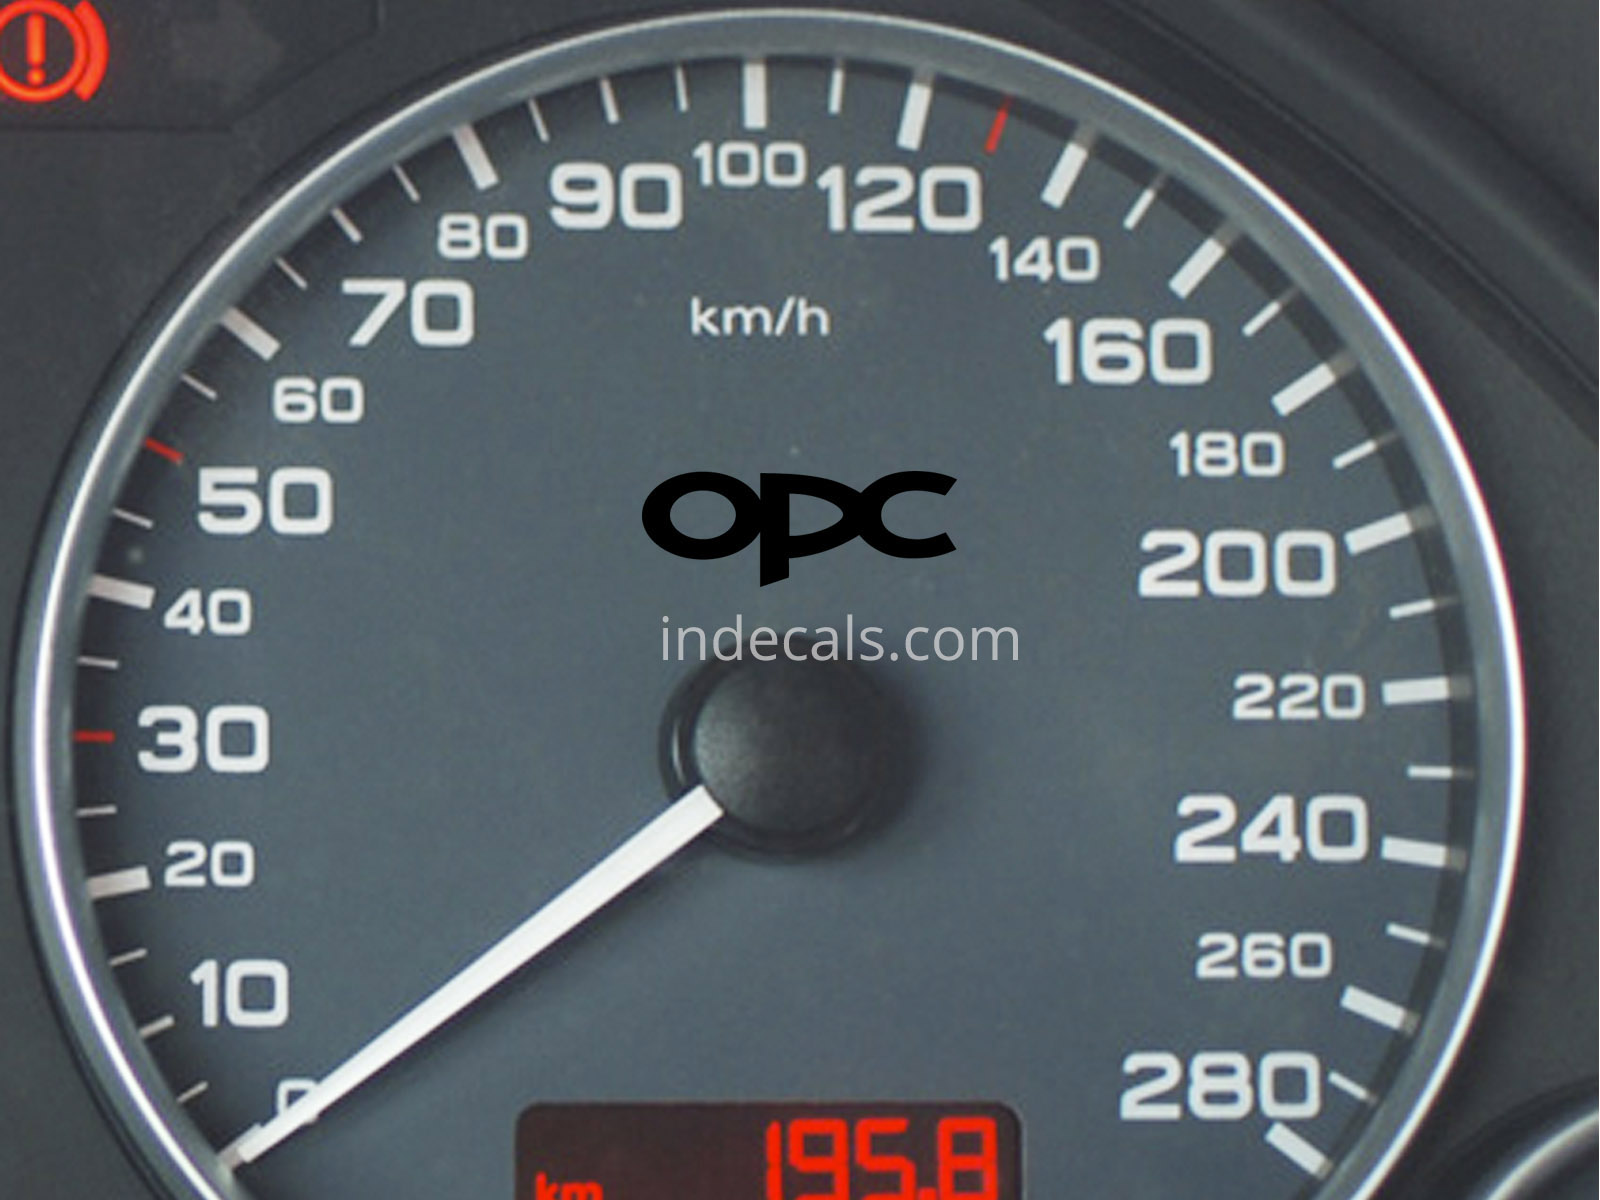 3 x Opel OPC Stickers for Speedometer - Black